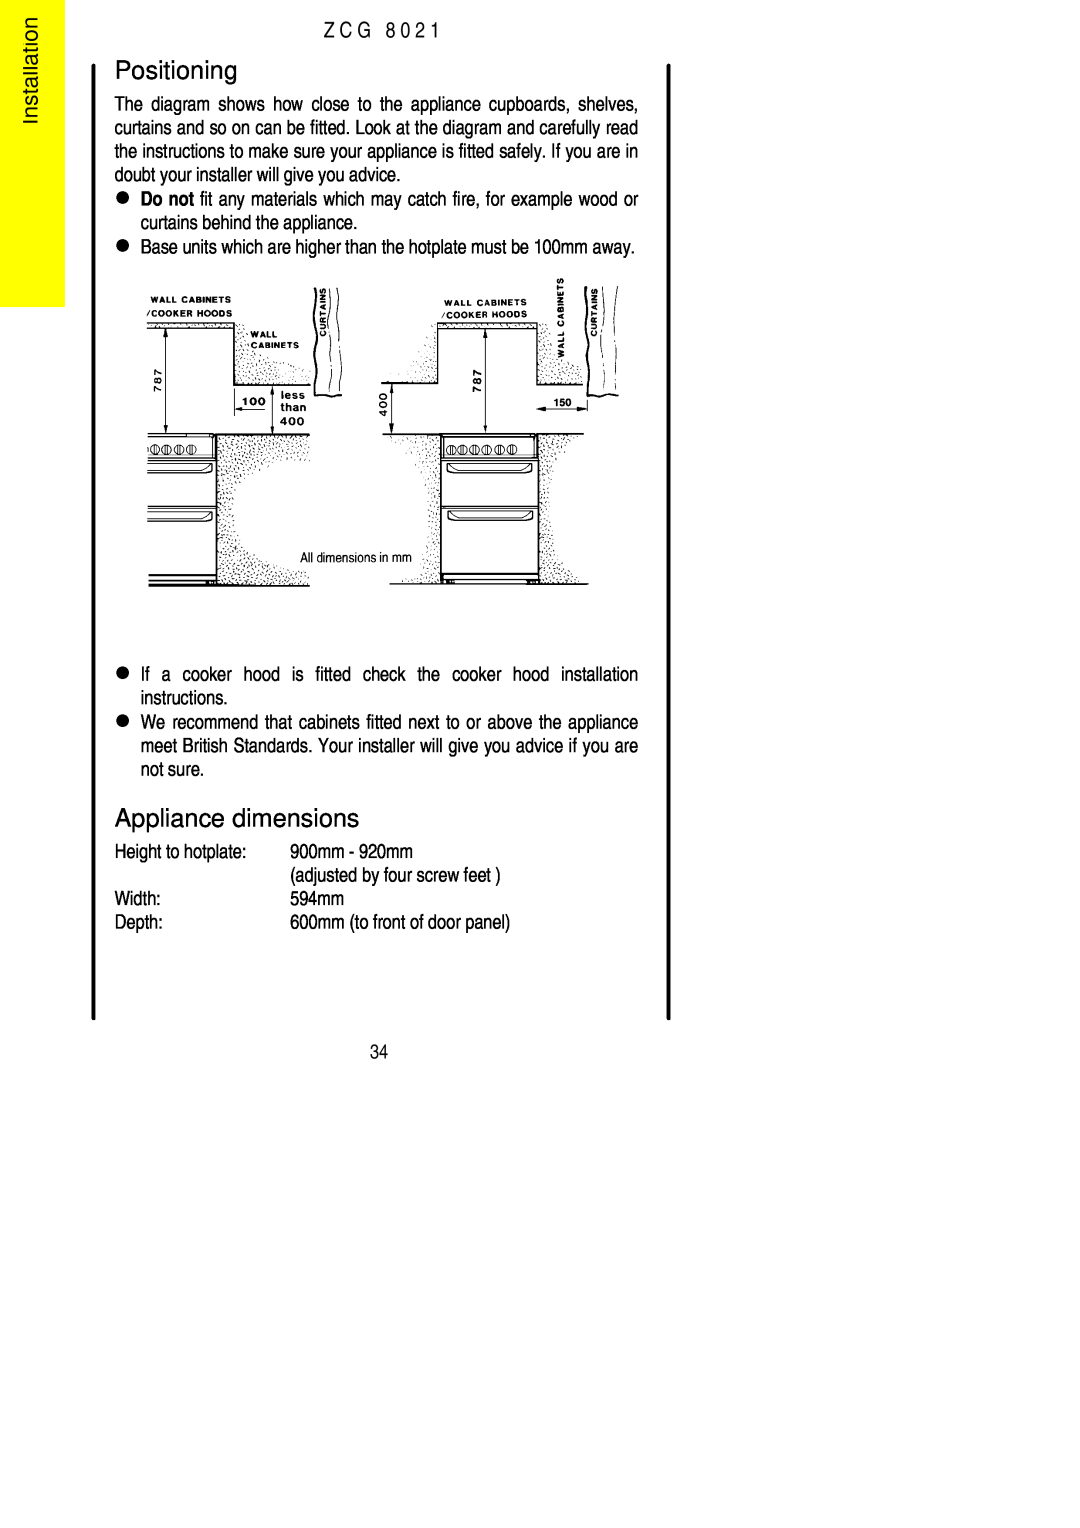 Zanussi ZCG 8021 manual Positioning, Appliance dimensions, Installation, Z C G 